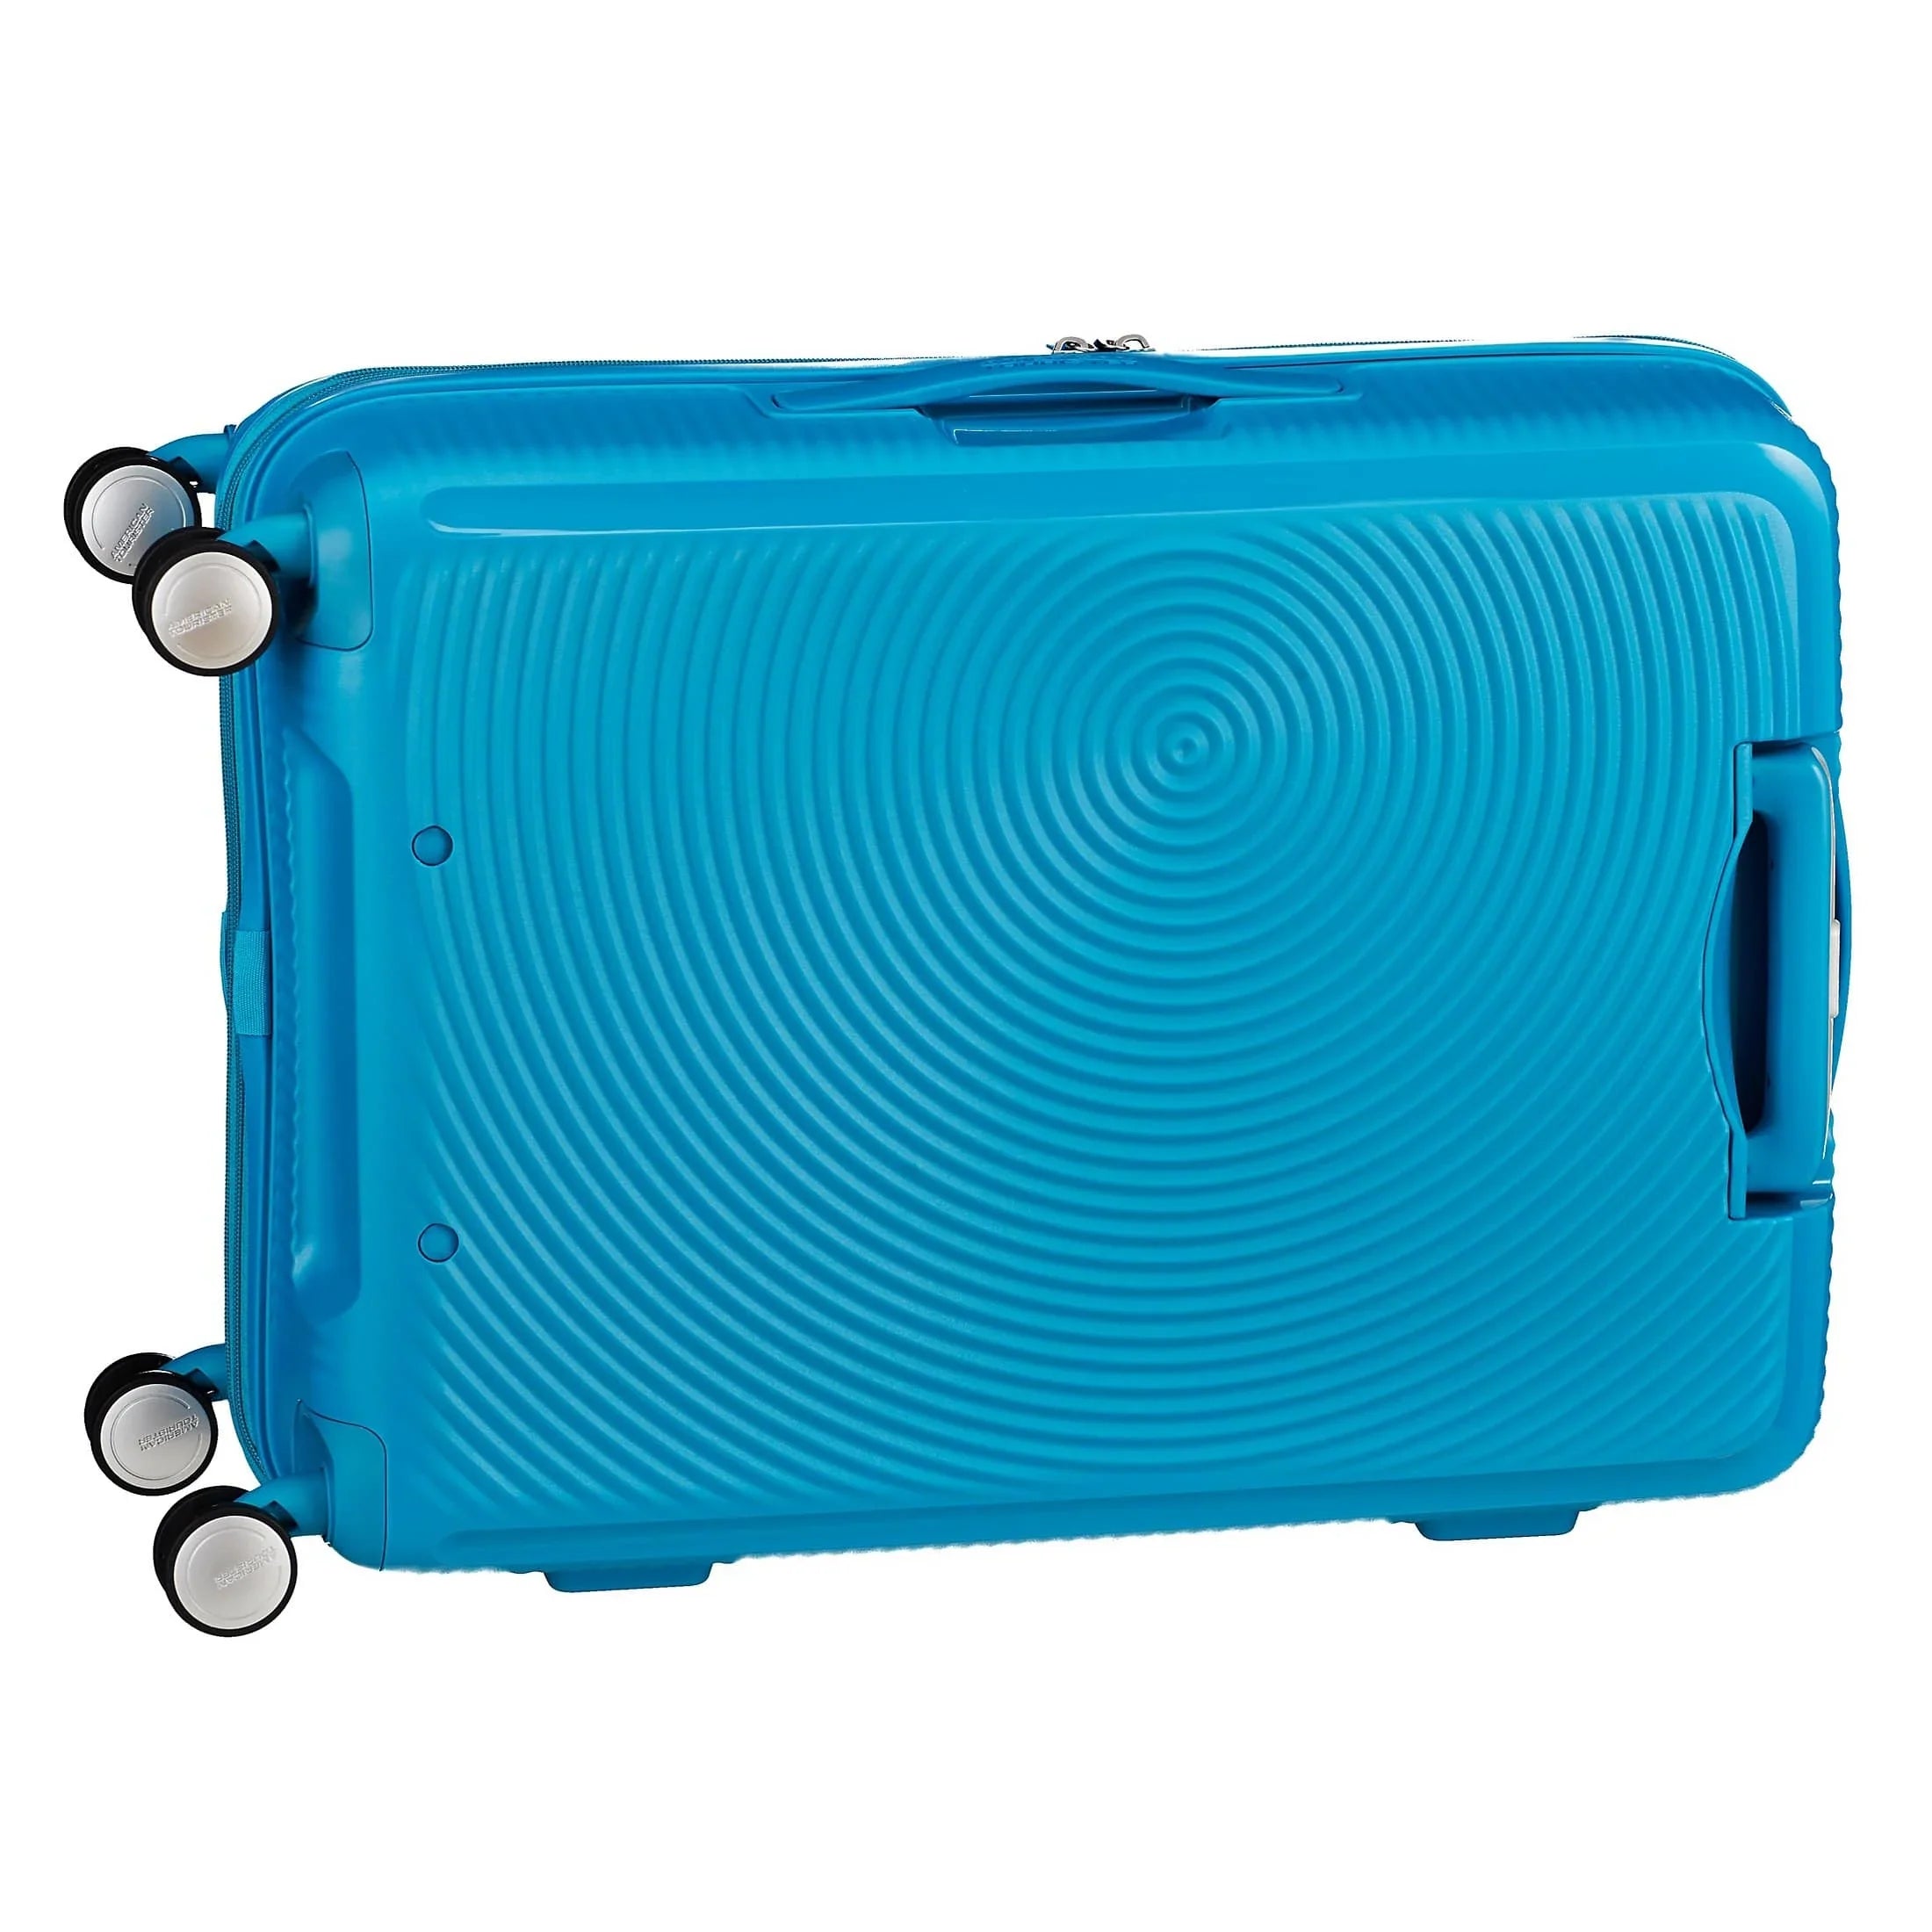 American Tourister Soundbox 4-Rollen-Trolley 67 cm - stone blue